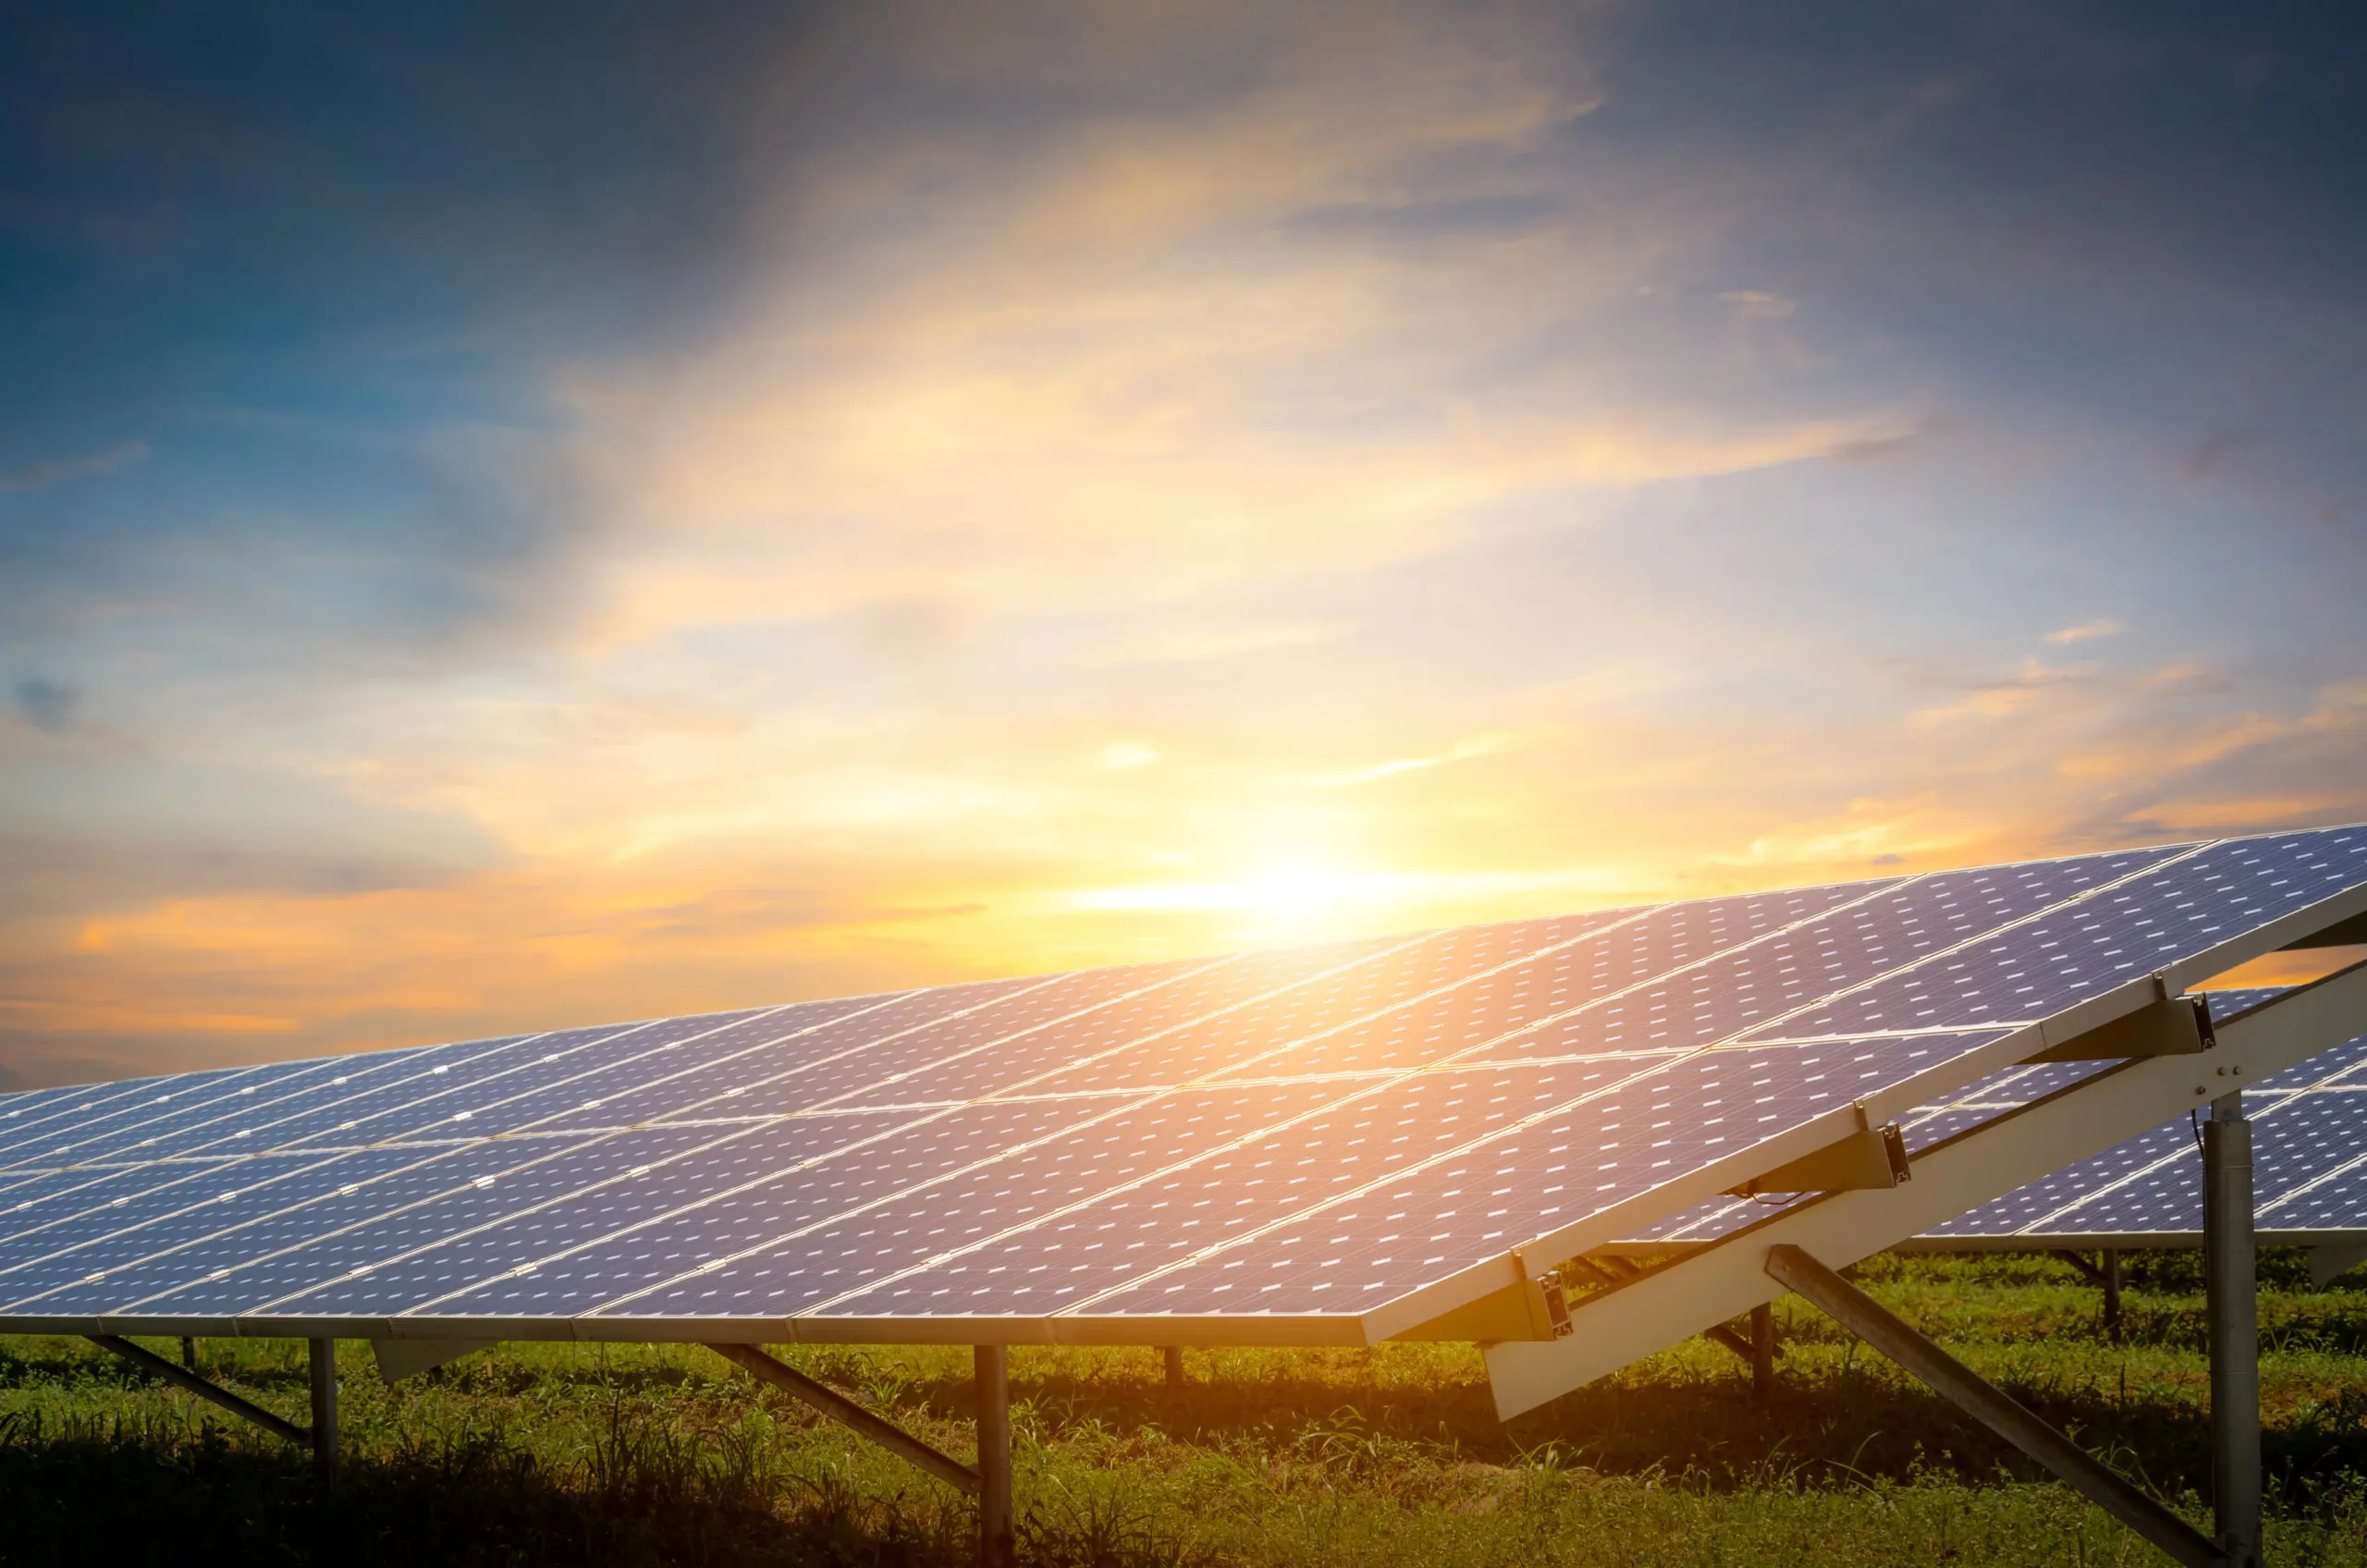 sun solar panels - What is the best sun power solar panel